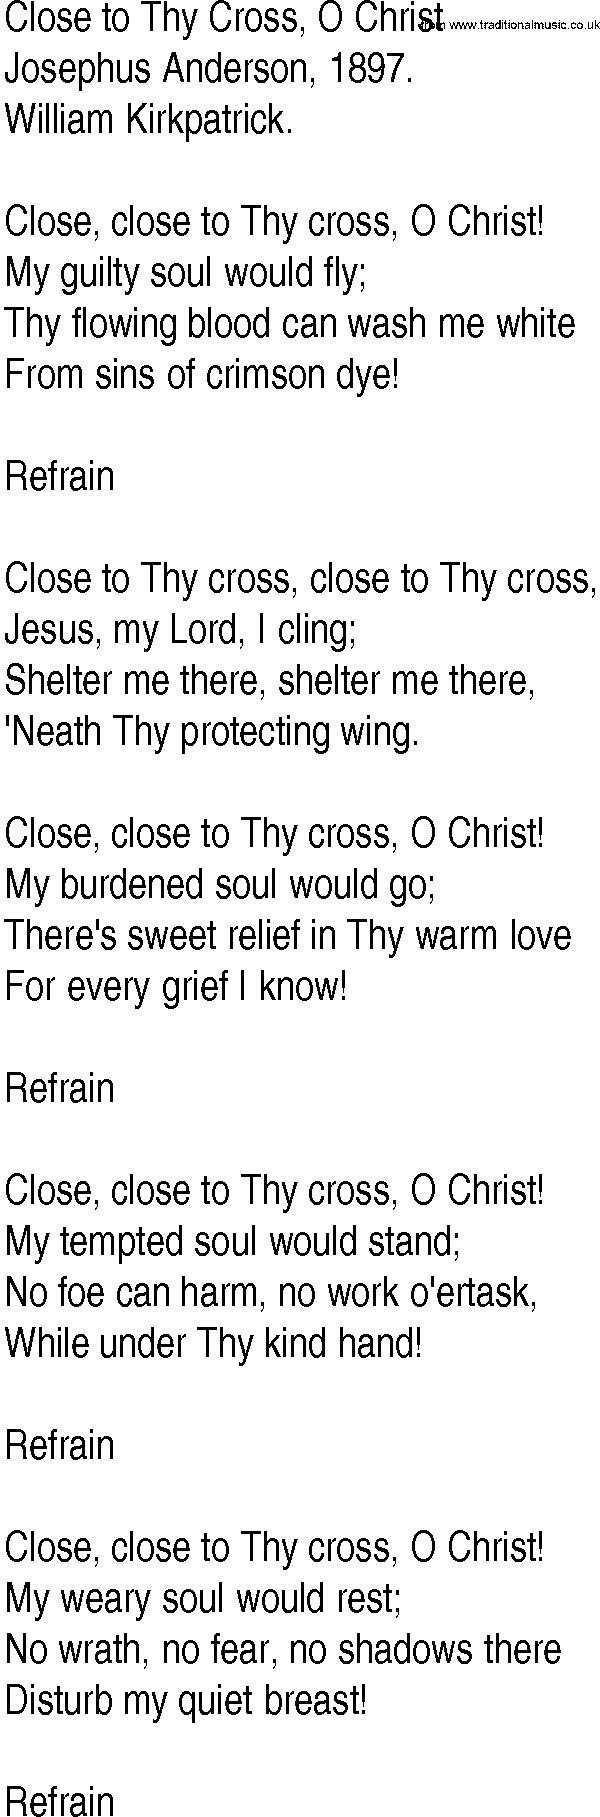 Hymn and Gospel Song: Close to Thy Cross, O Christ by Josephus Anderson lyrics